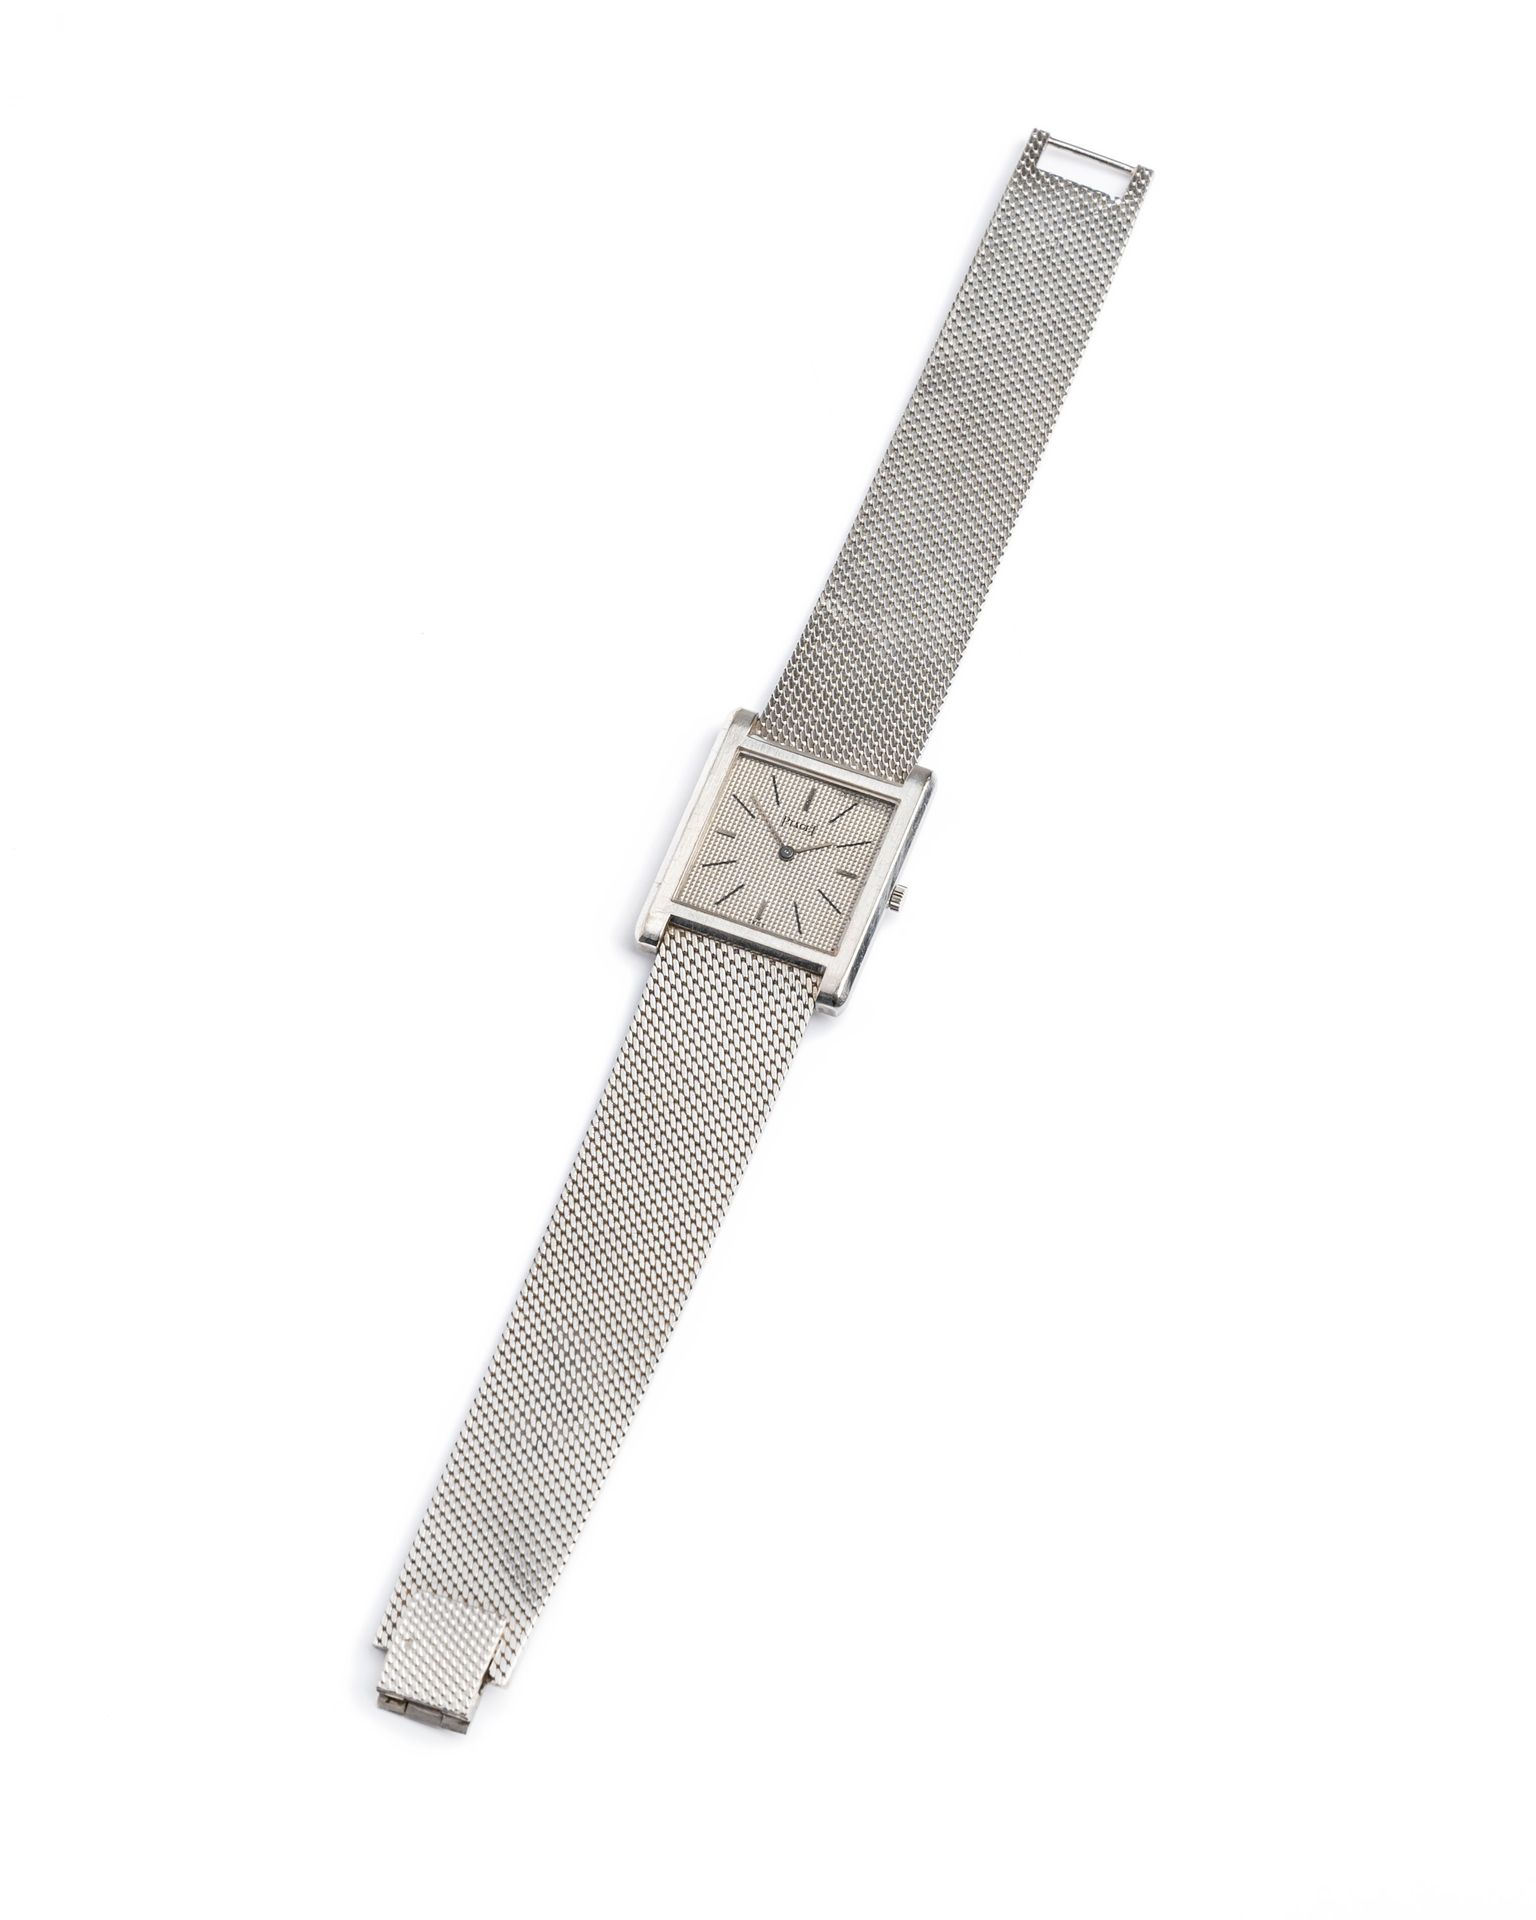 Null PIAGET
18K（千分之七十五）白金女士腕表，灰色背景的长方形表盘上有一个钻石点图案，已签名。表带由柔软的编织网制成。石英机芯。
毛重：61.1克&hellip;